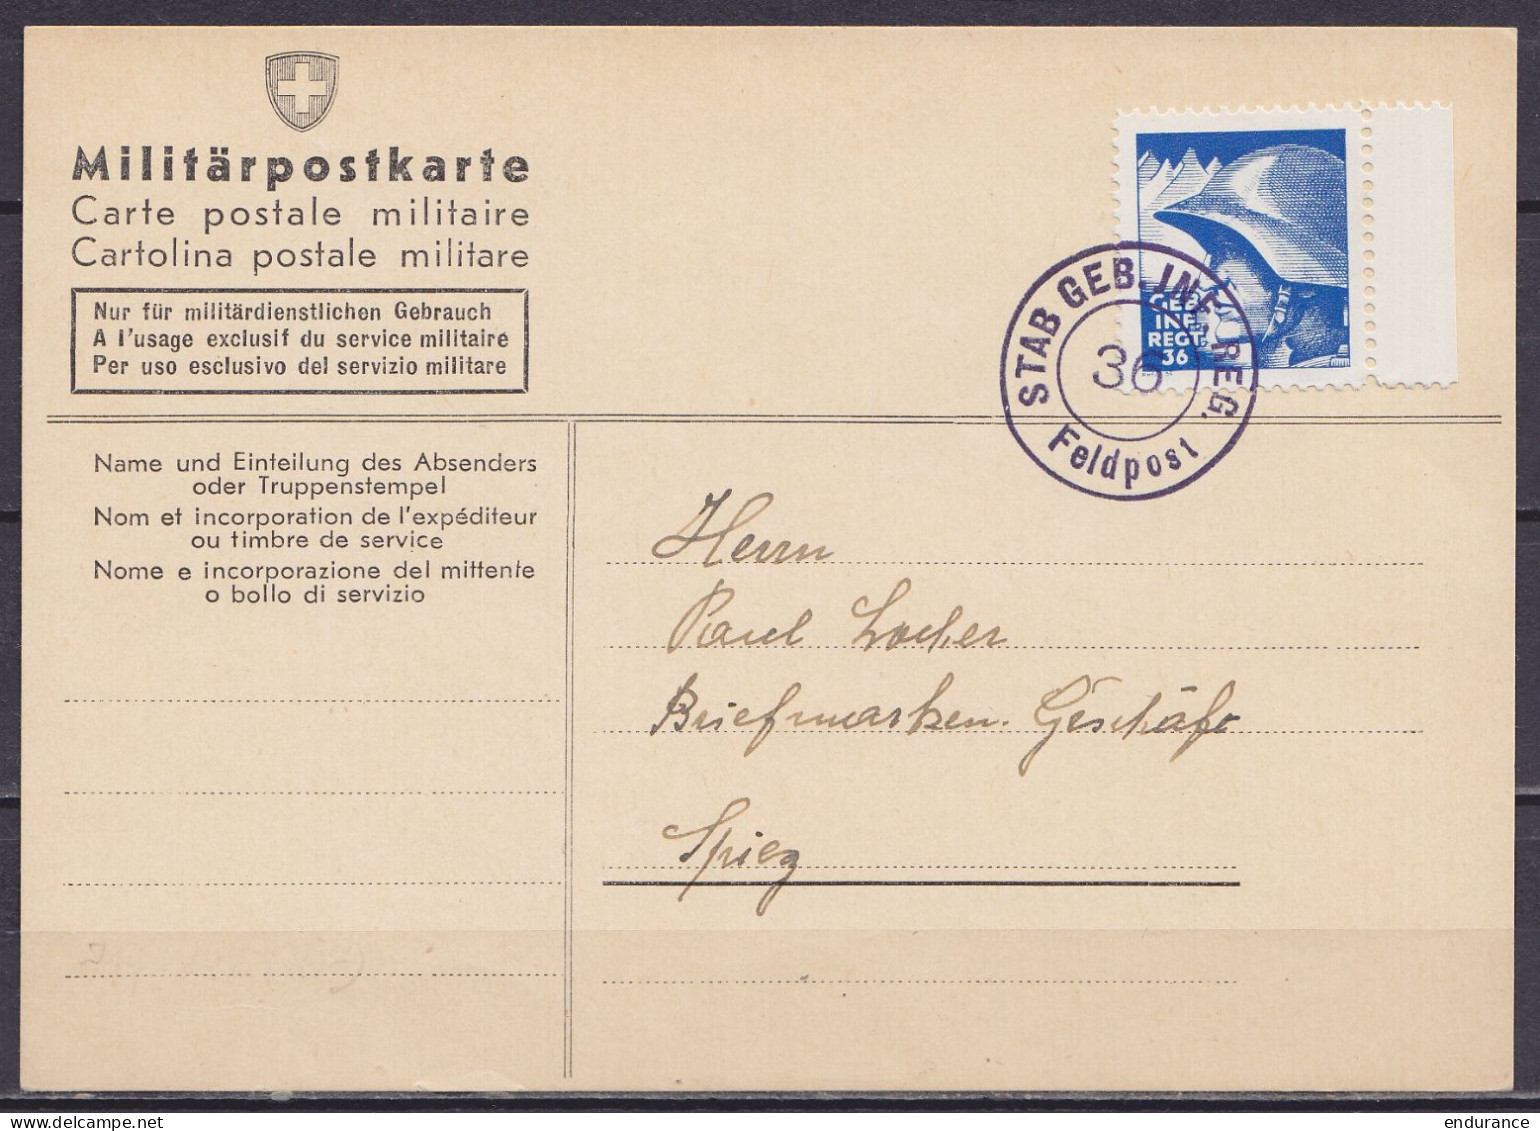 Suisse - Poste Militaire - Militärpostkarte. Affr. Vignette "GEB.INF.REGT.36" Oblit. "STAB GEB. INF.REG. /36/ Feldpost"  - Documenti